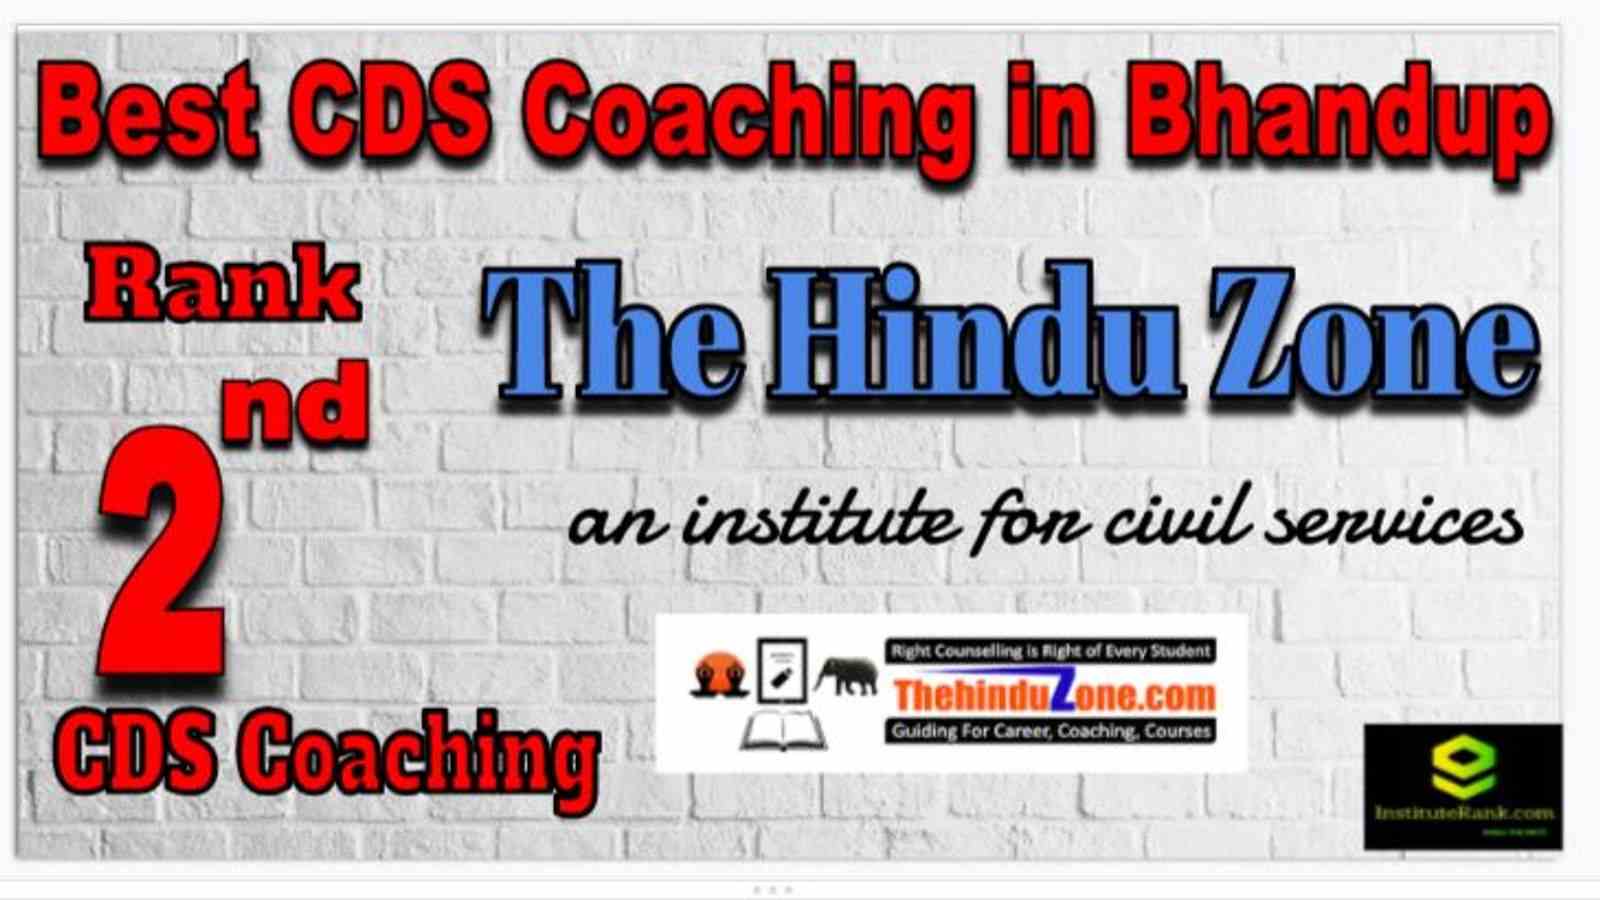 Rank 2 Best CDS Coaching in Bhandup